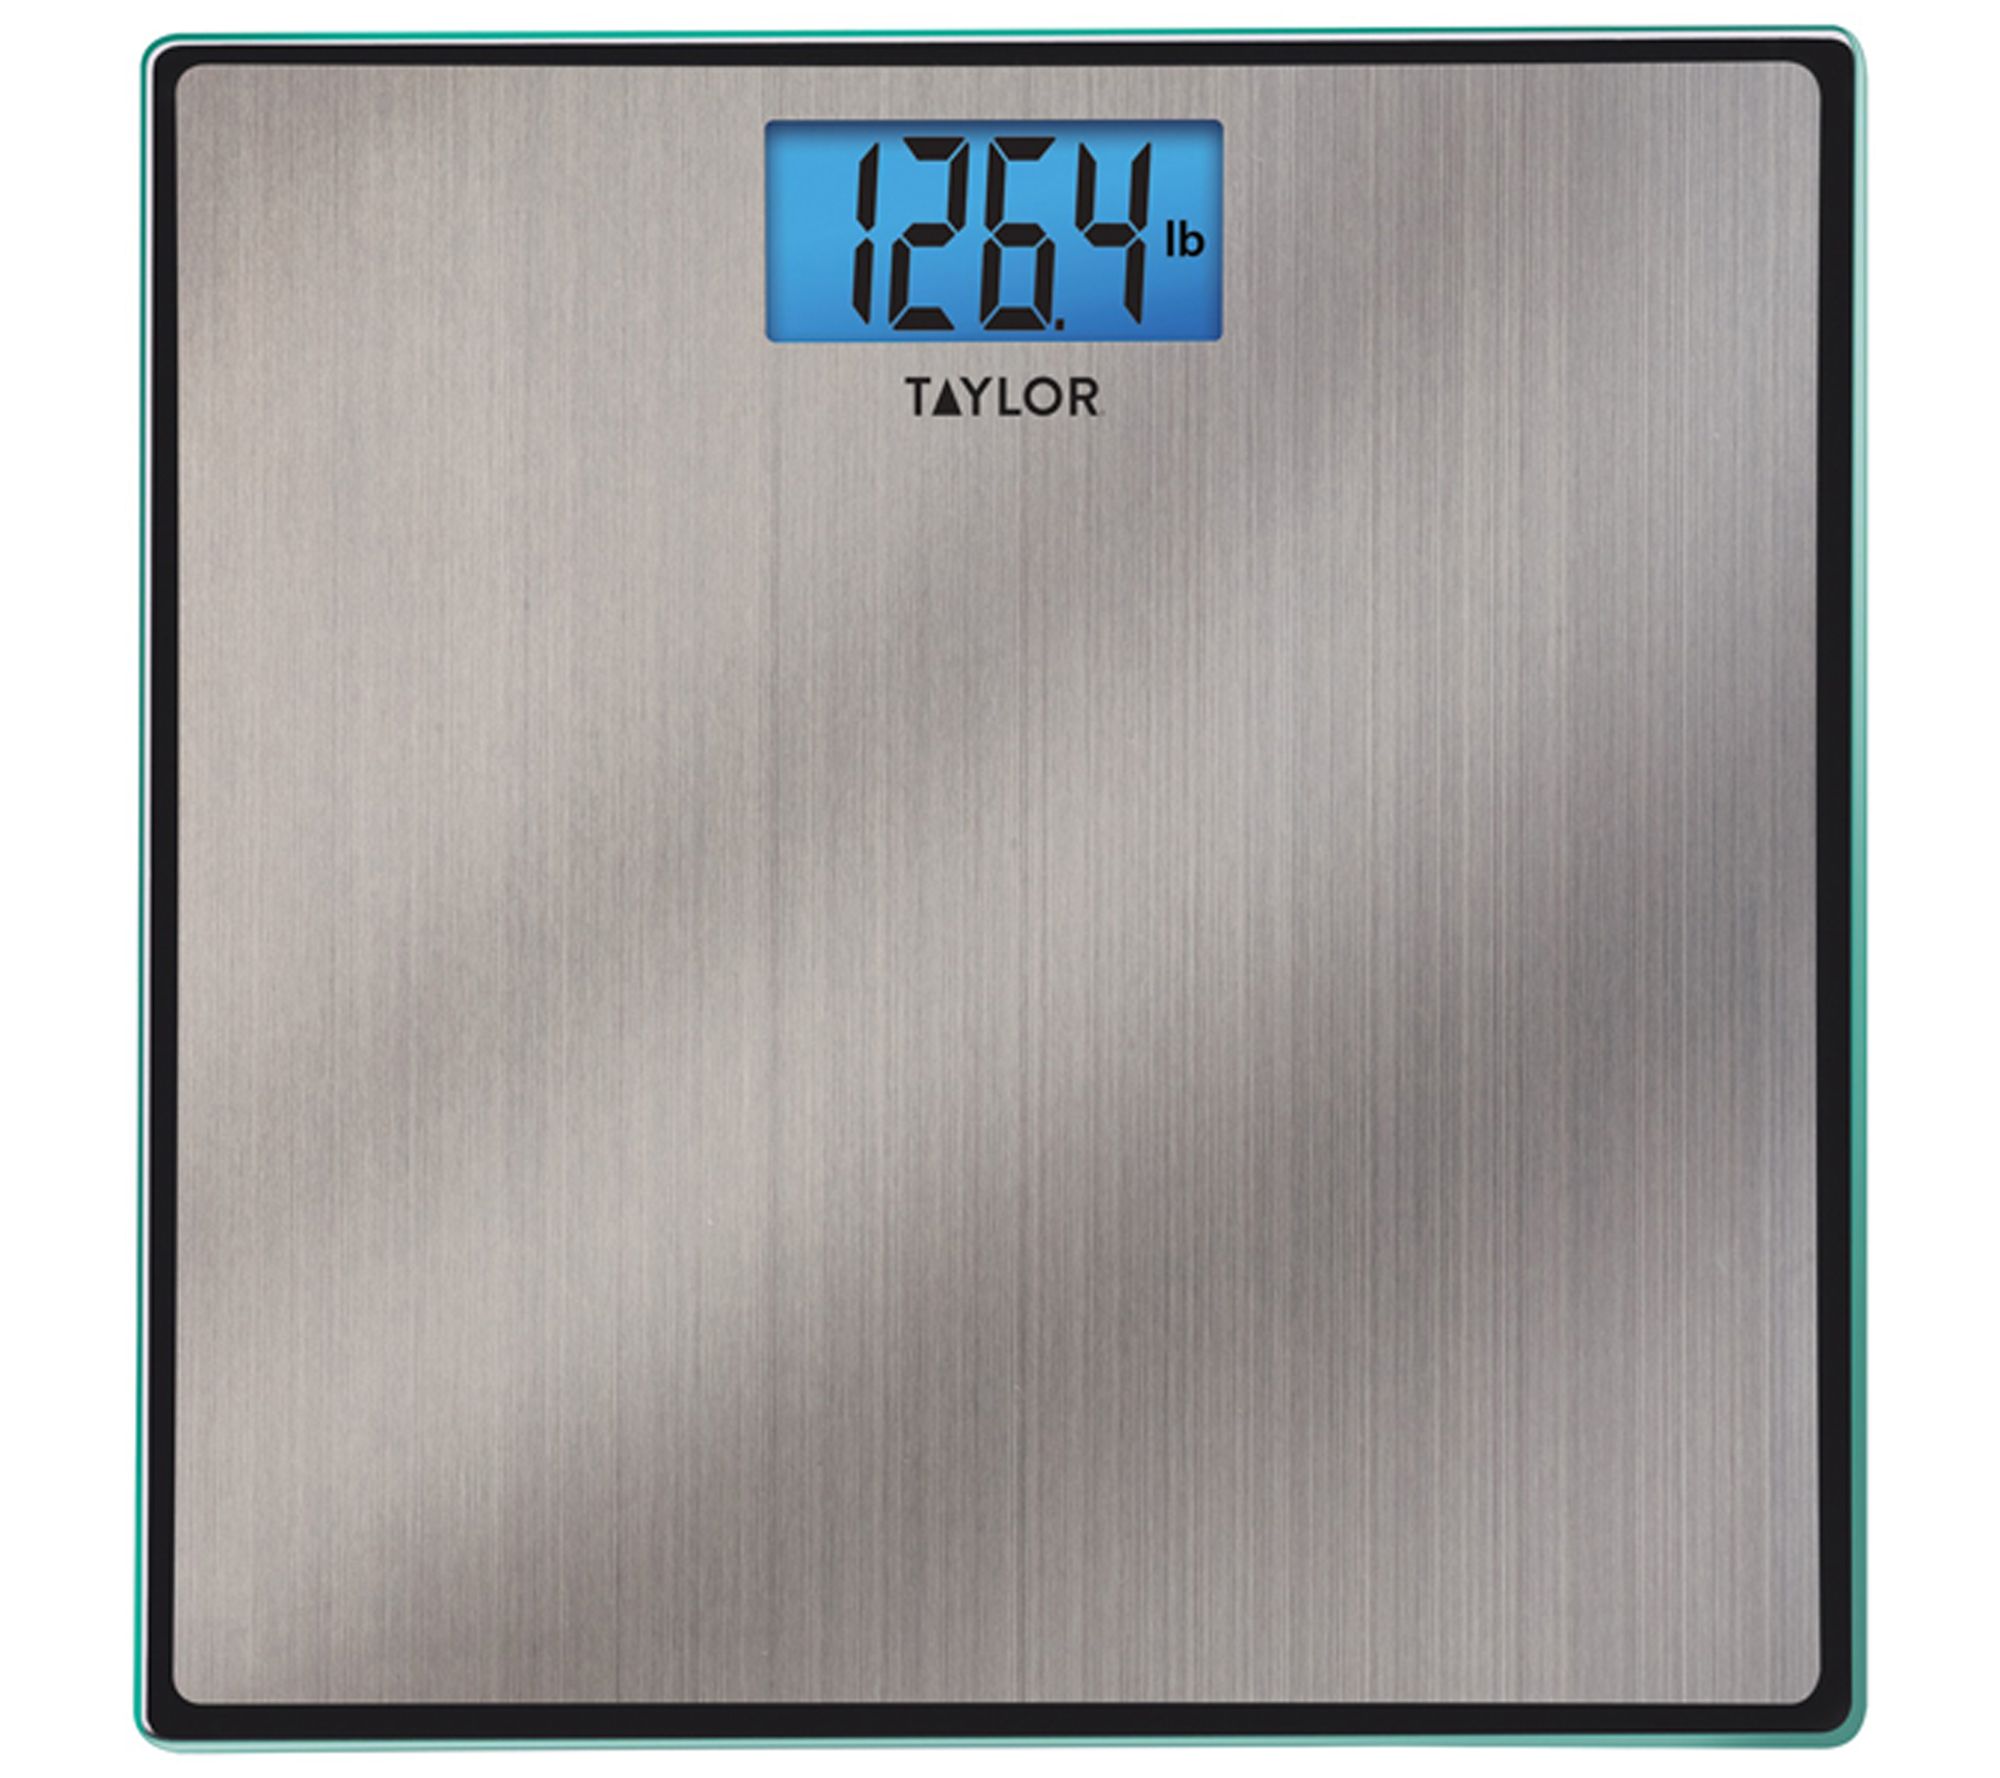 Taylor Digital Body Weight Scale Battey Powered Black/Grey, 400lb Capacity  